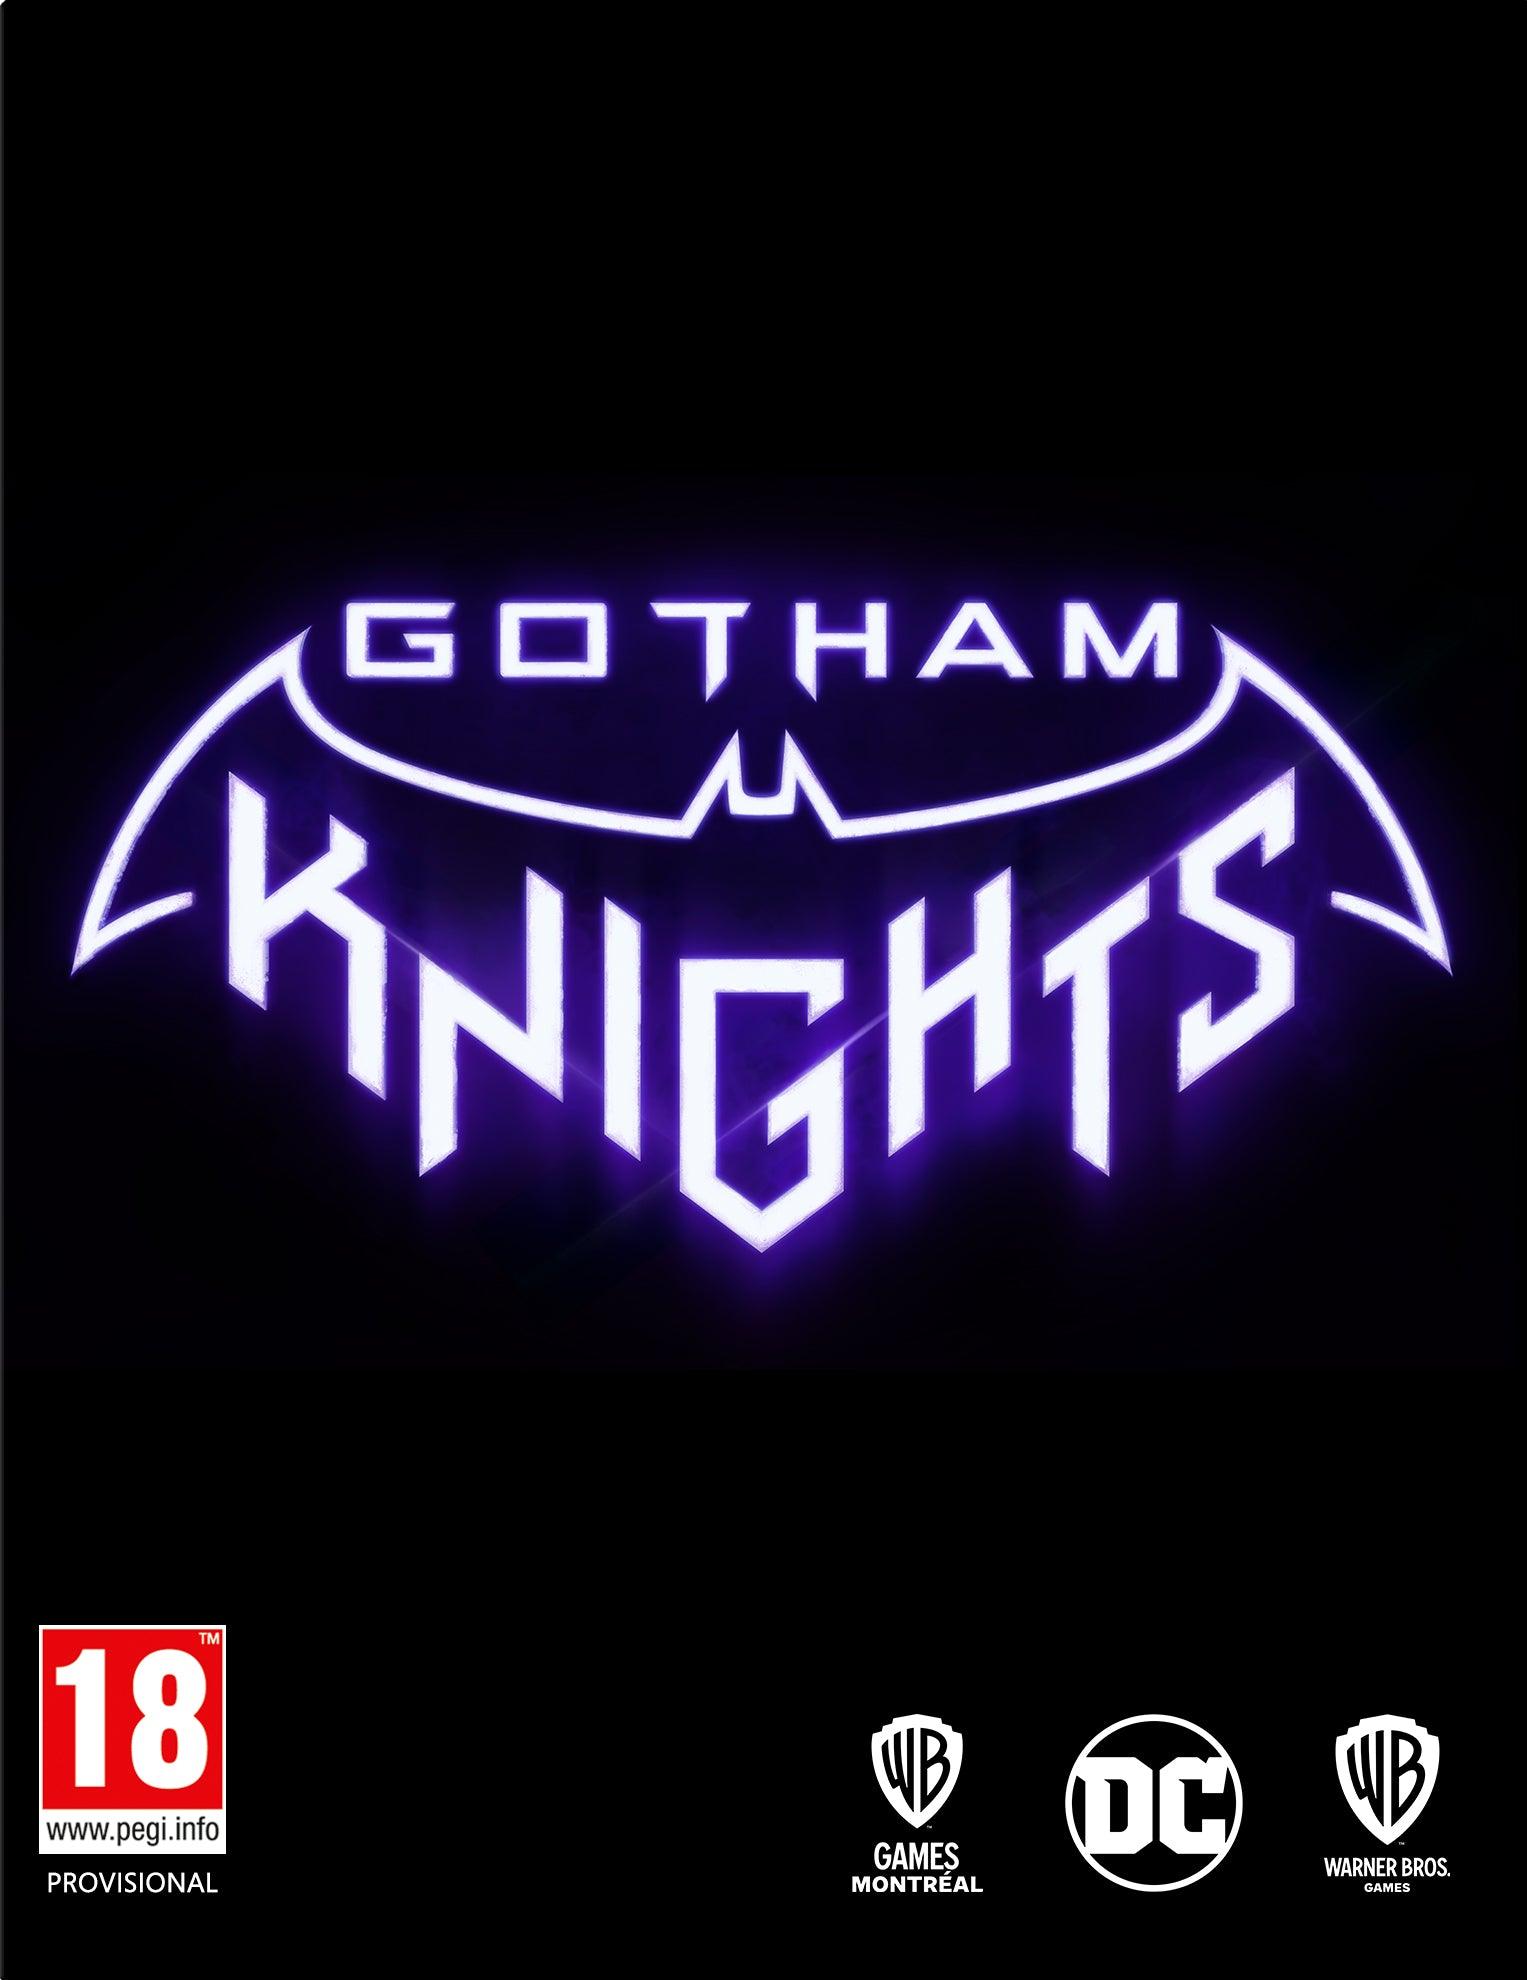 Gotham Knights - Want a New Gadget